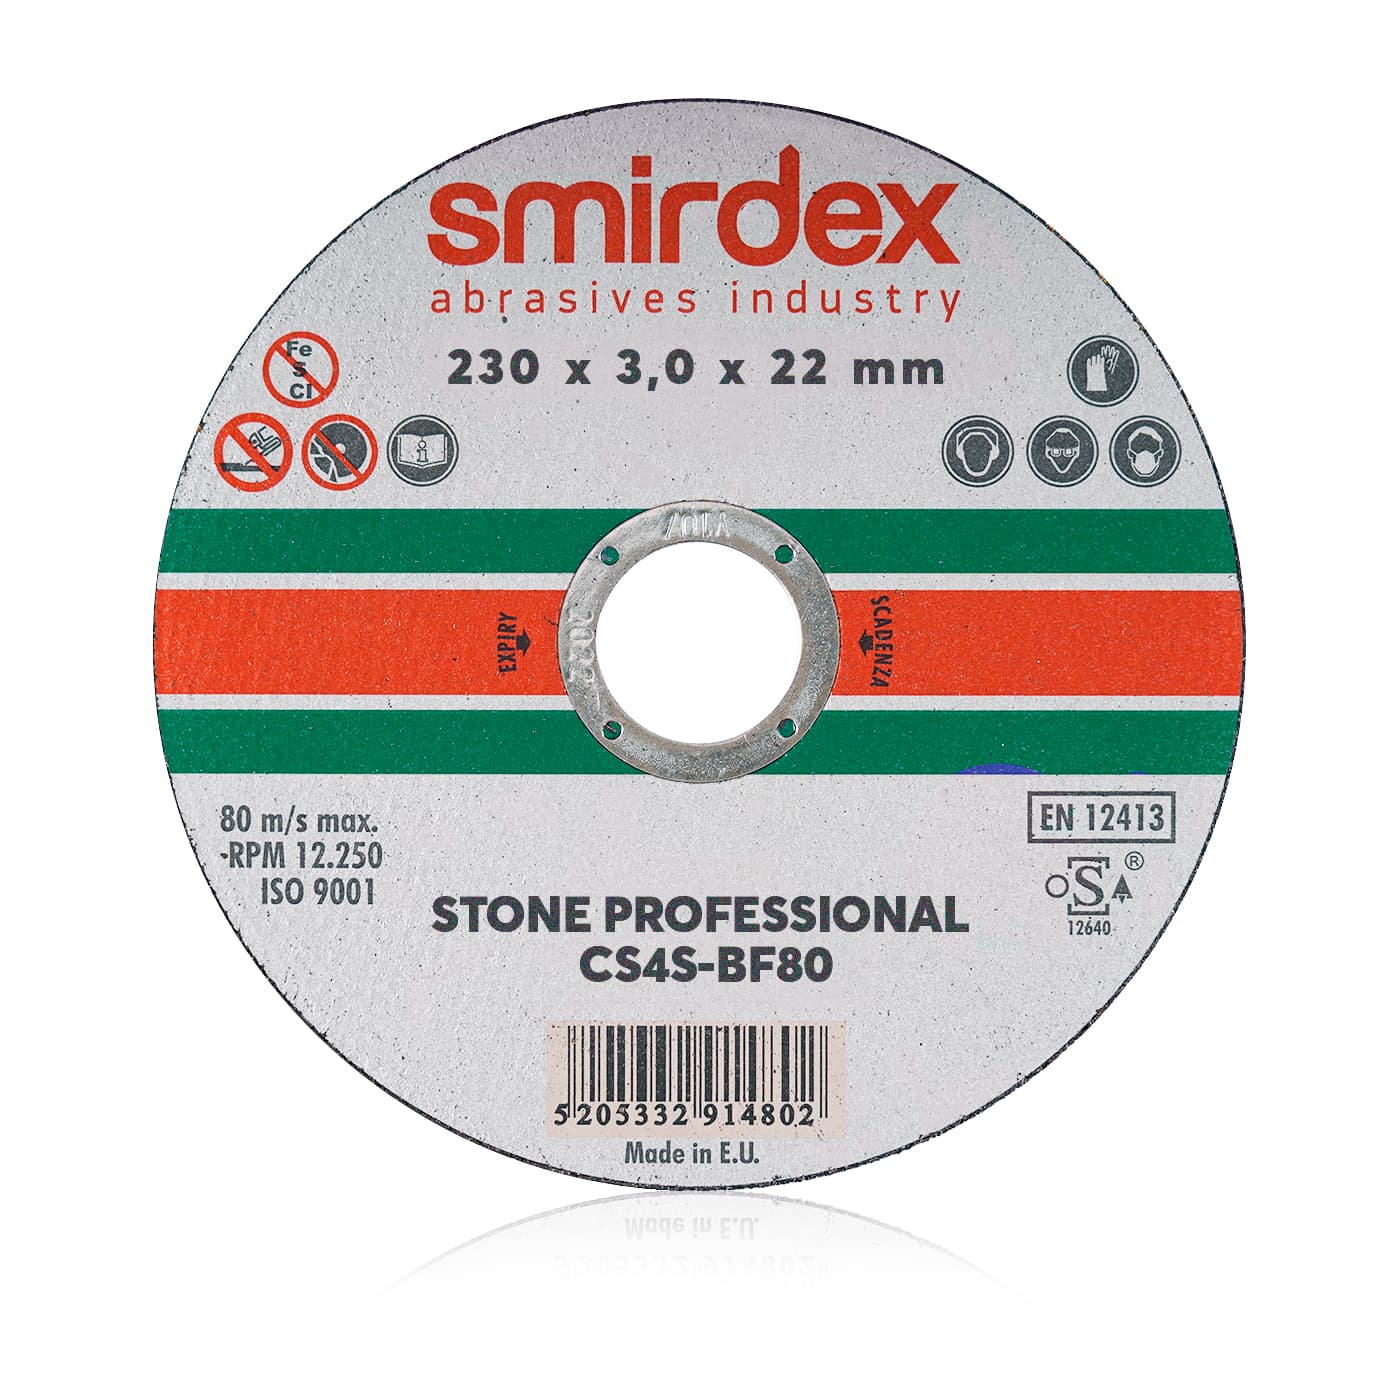 smirdex-912-cutting-wheels,precise marble cutting,long-lasting